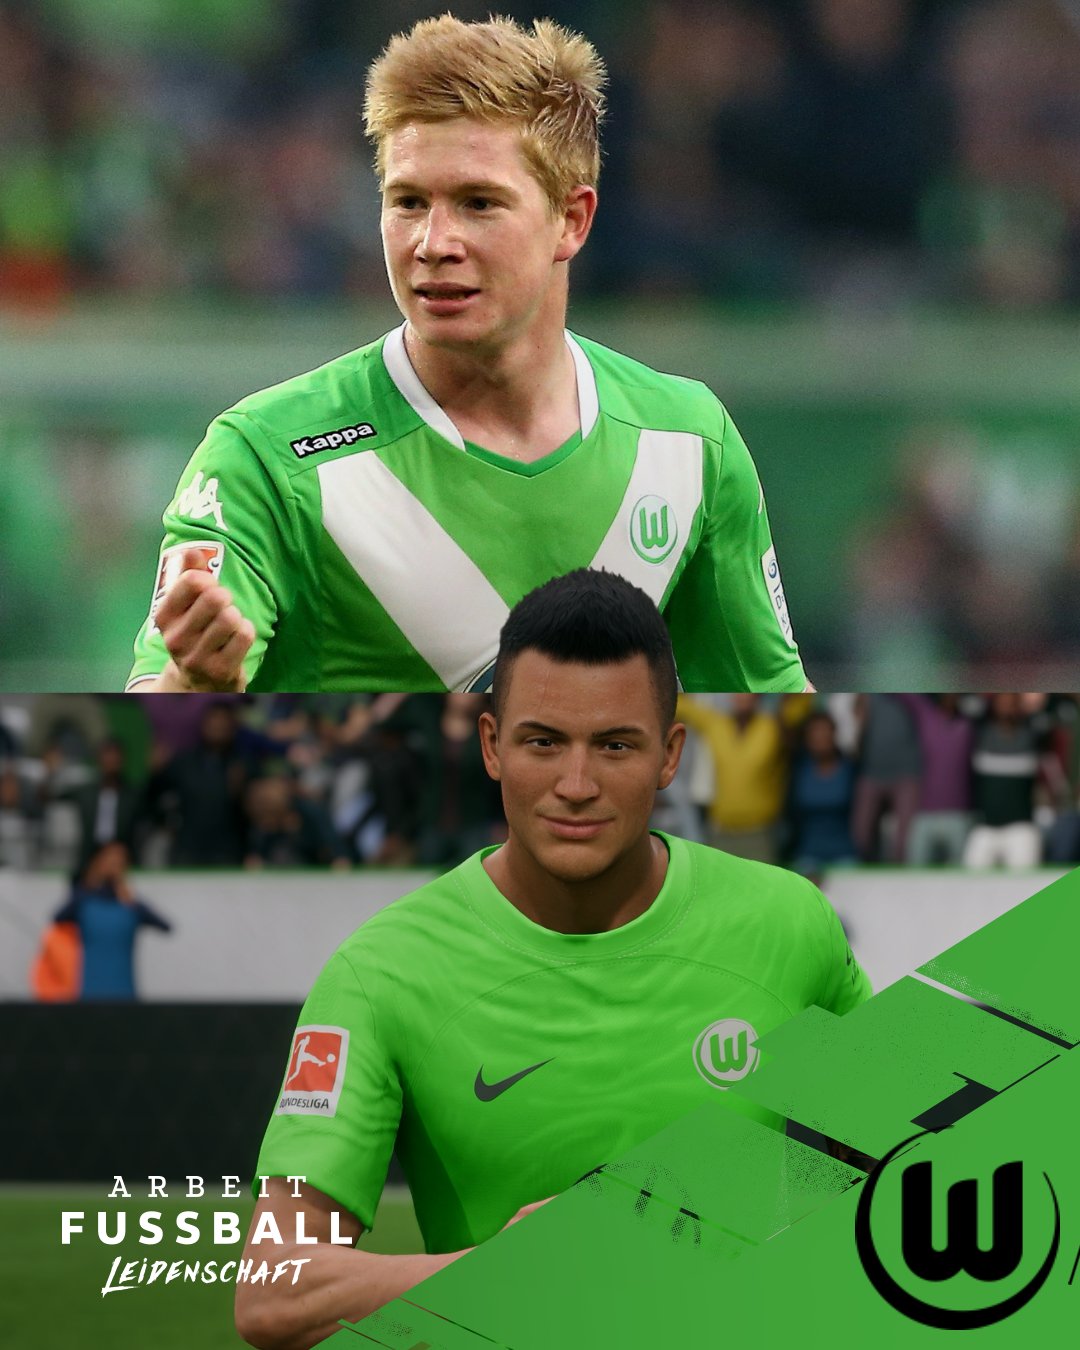 VfL Wolfsburg EN/US 🇬🇧 🇺🇸 on X: "@SidinhoLopez Underrated legends  https://t.co/l4VPNgmaQO" / X